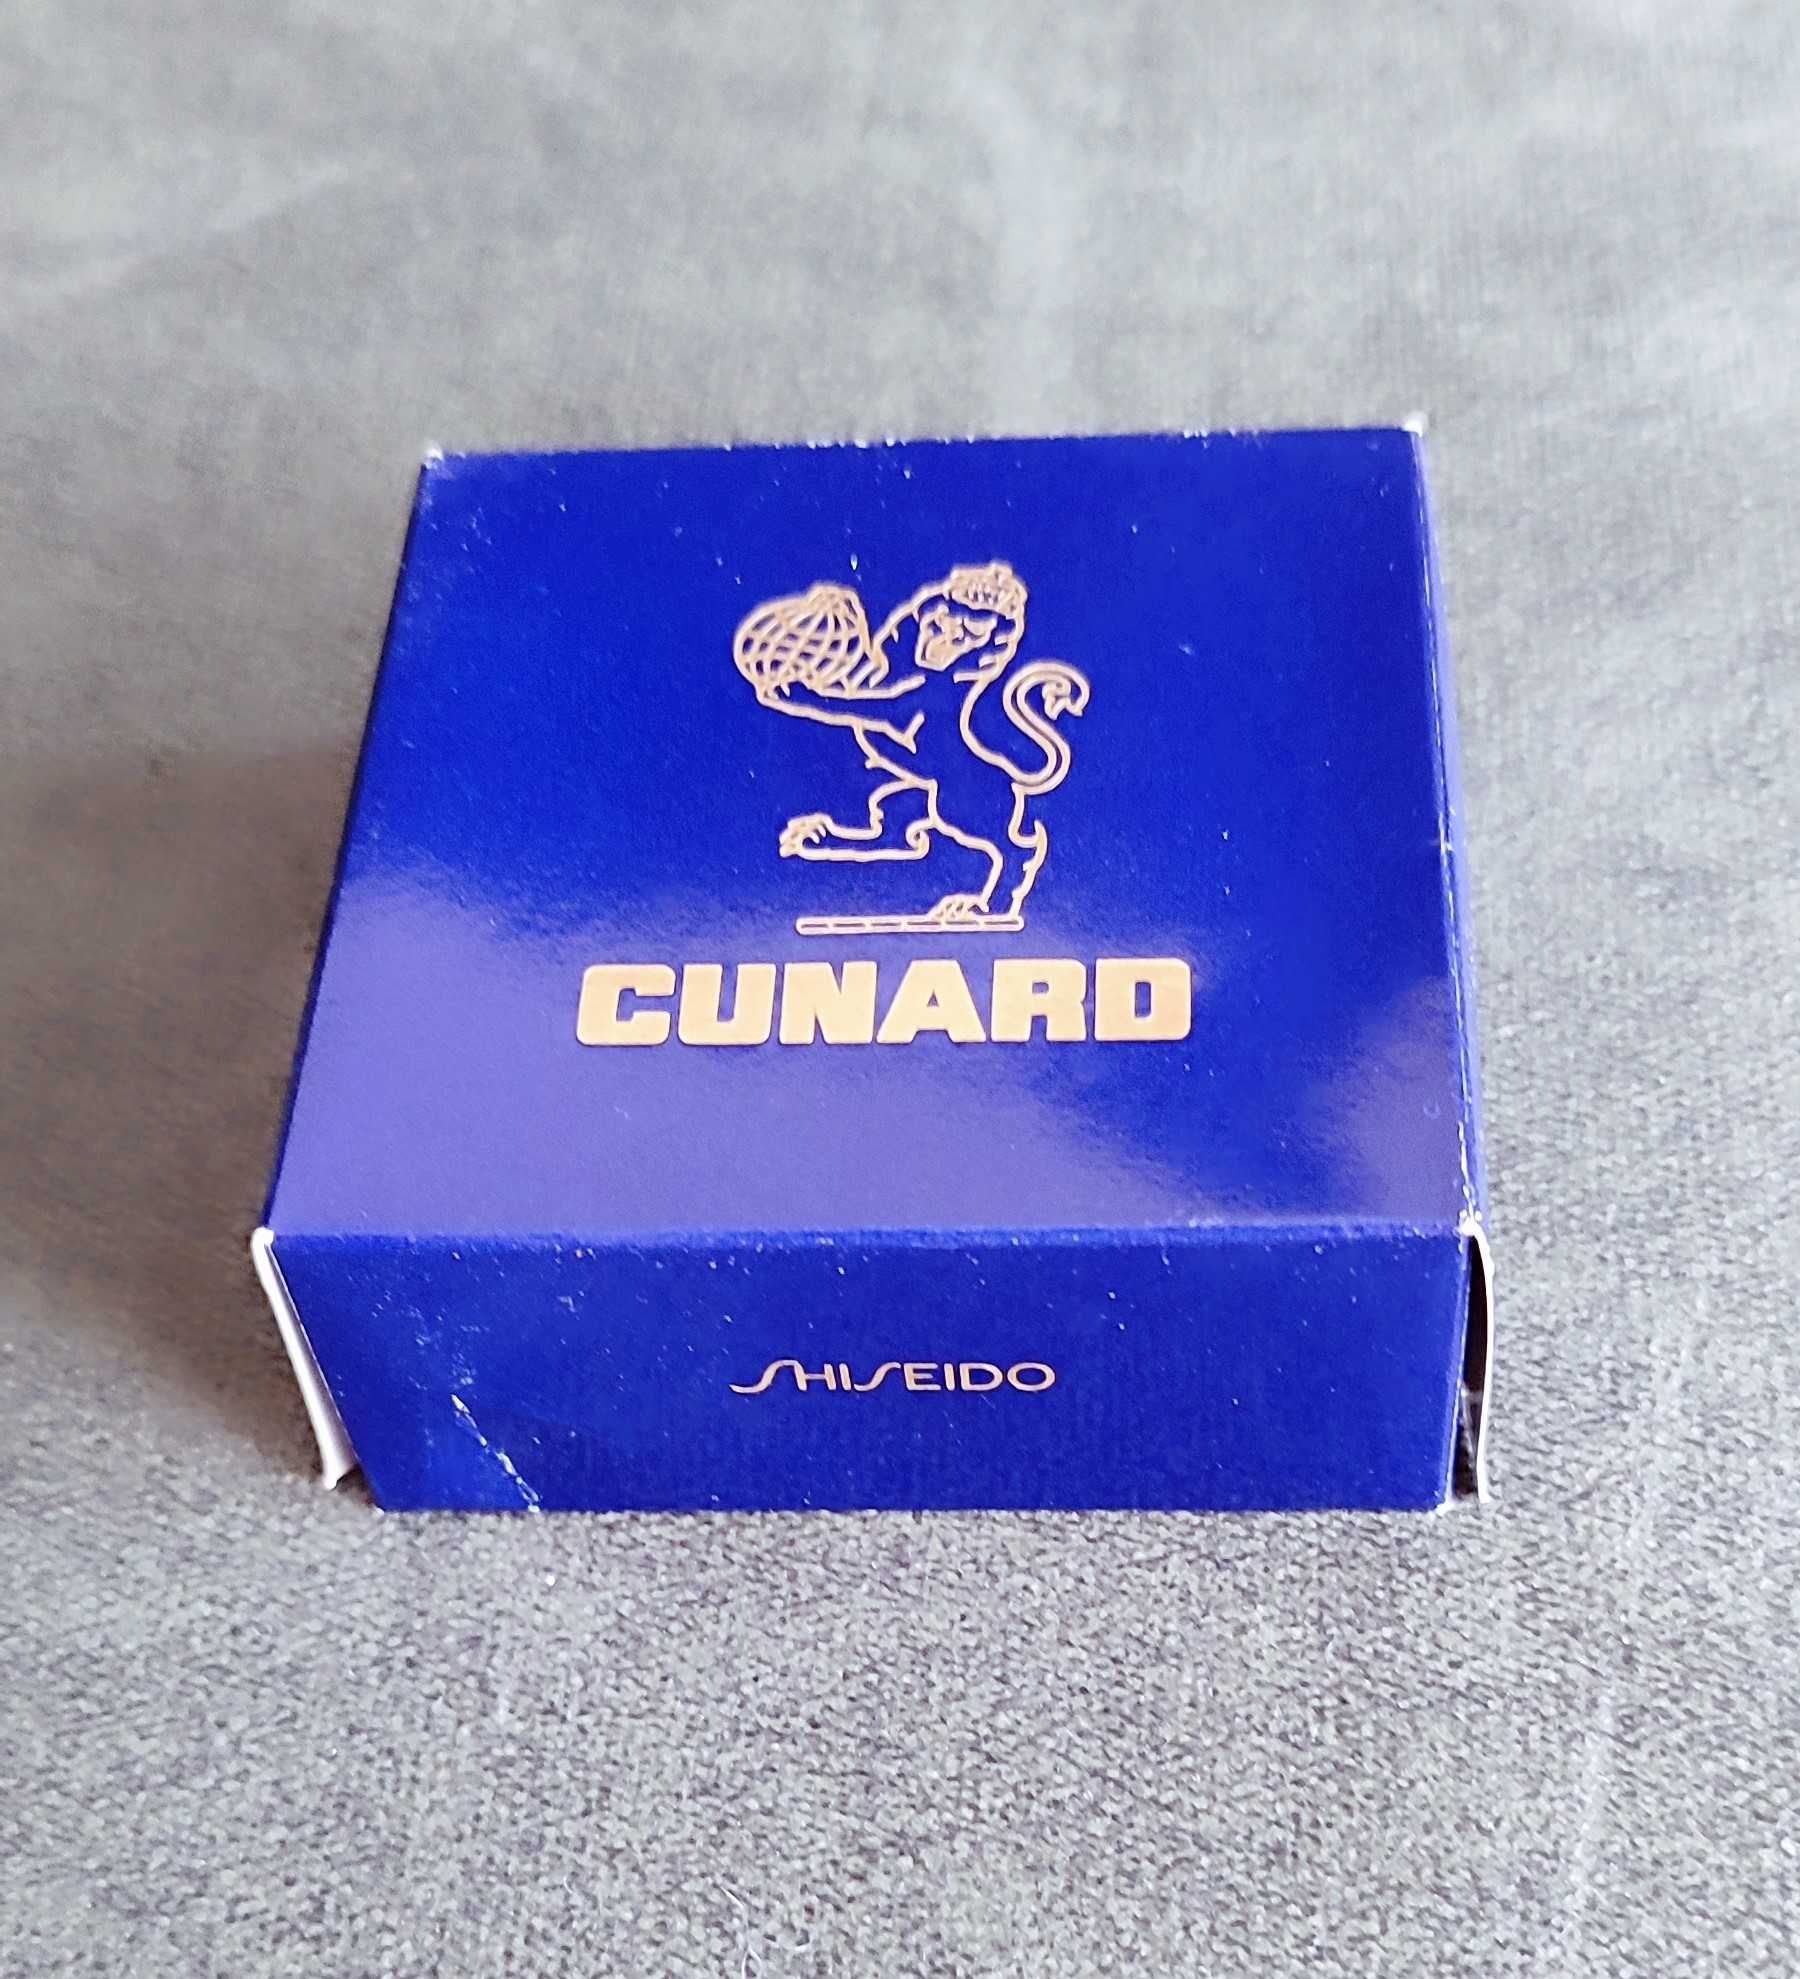 Mydło Shiseido dla Cunard